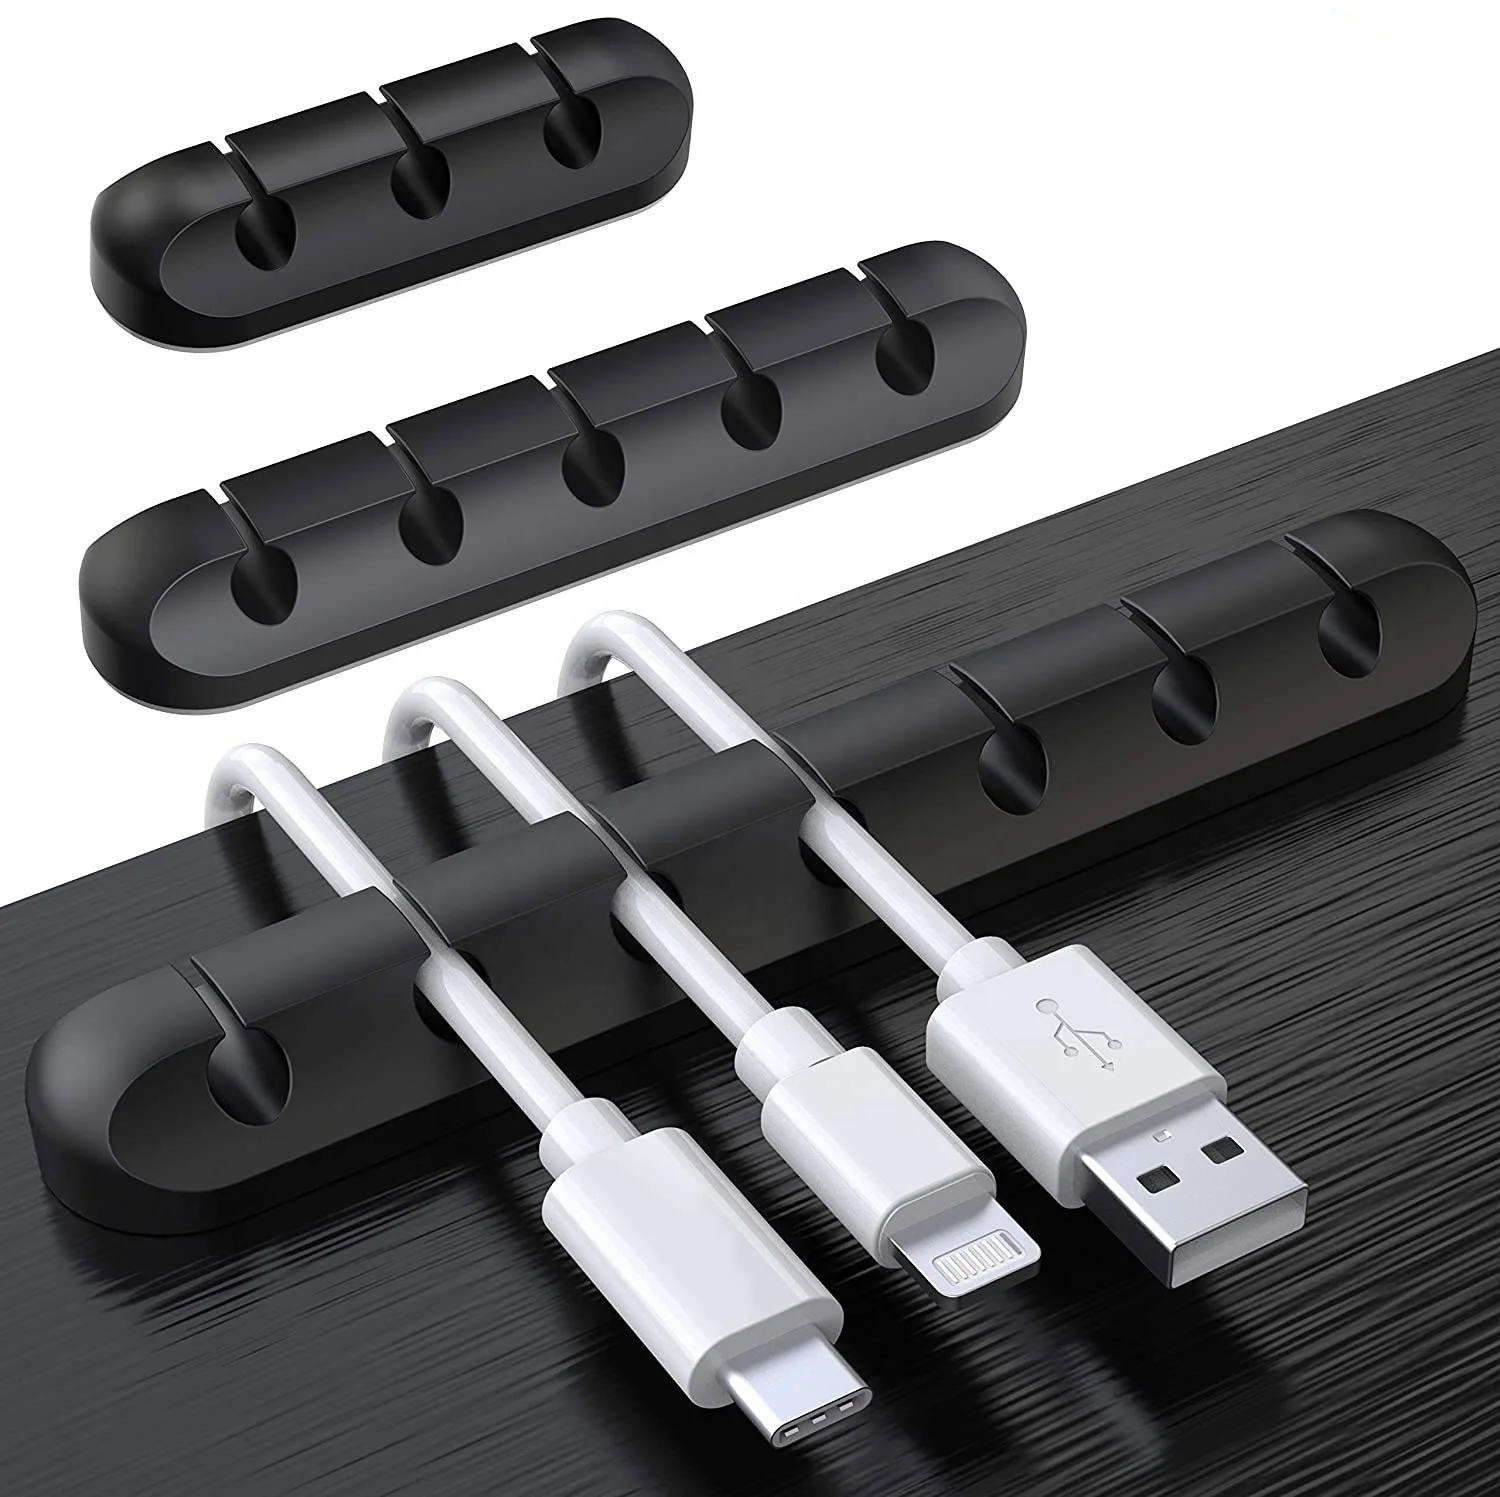 

Cable Organizer USB Holder Flexible Winder Management Cable Clips For Earphone Desk, Black/gray/oem